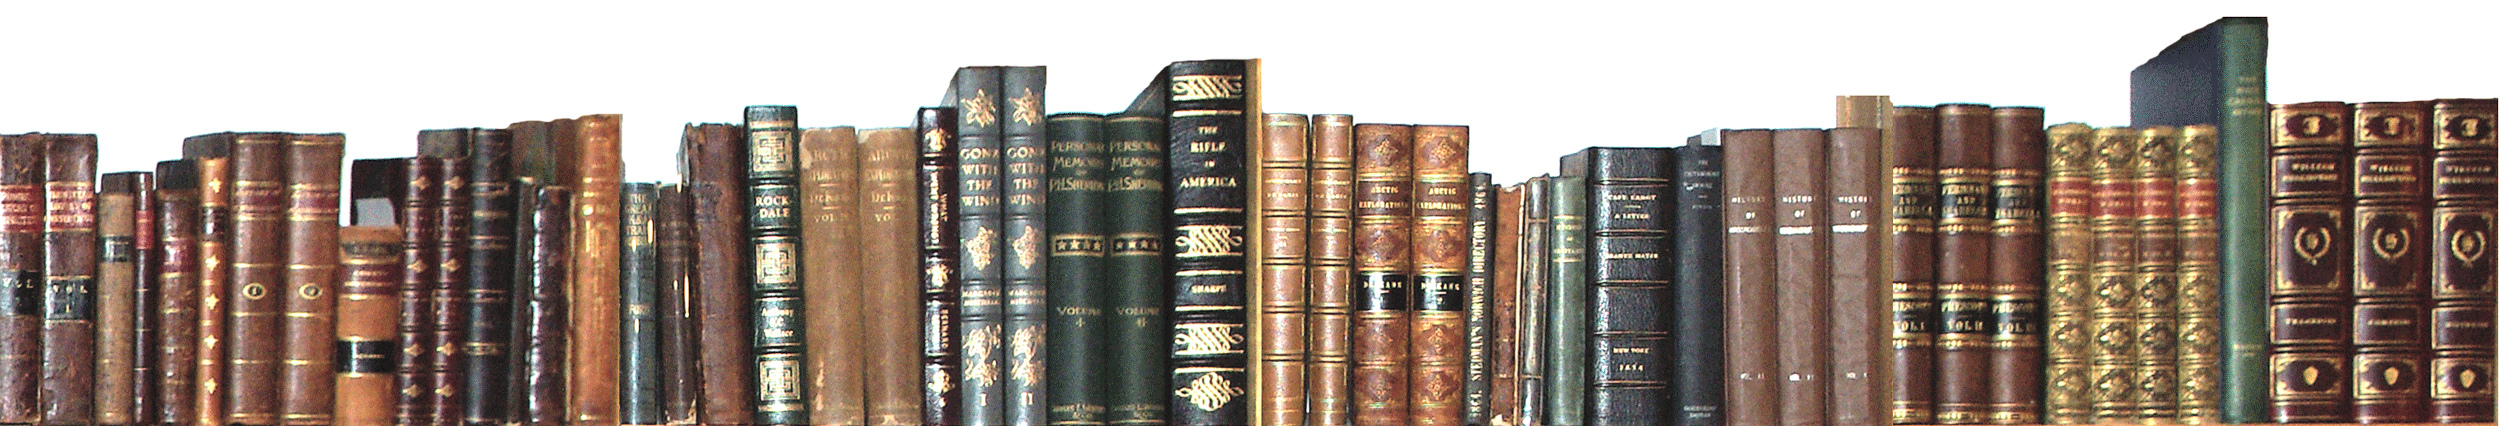 Shelf Of Antiquarian Books